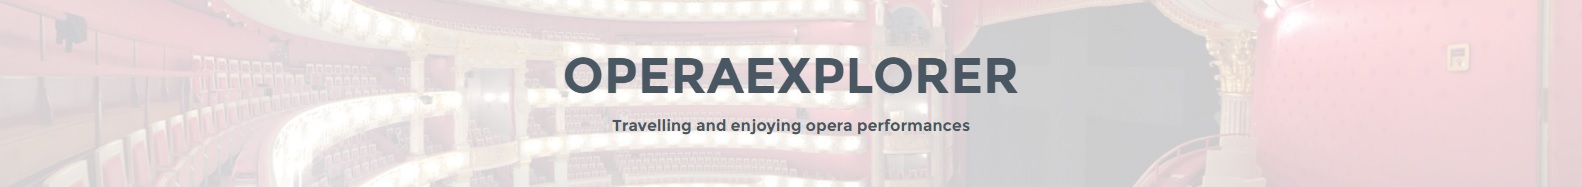 Operaexplorer @antraza’s blog